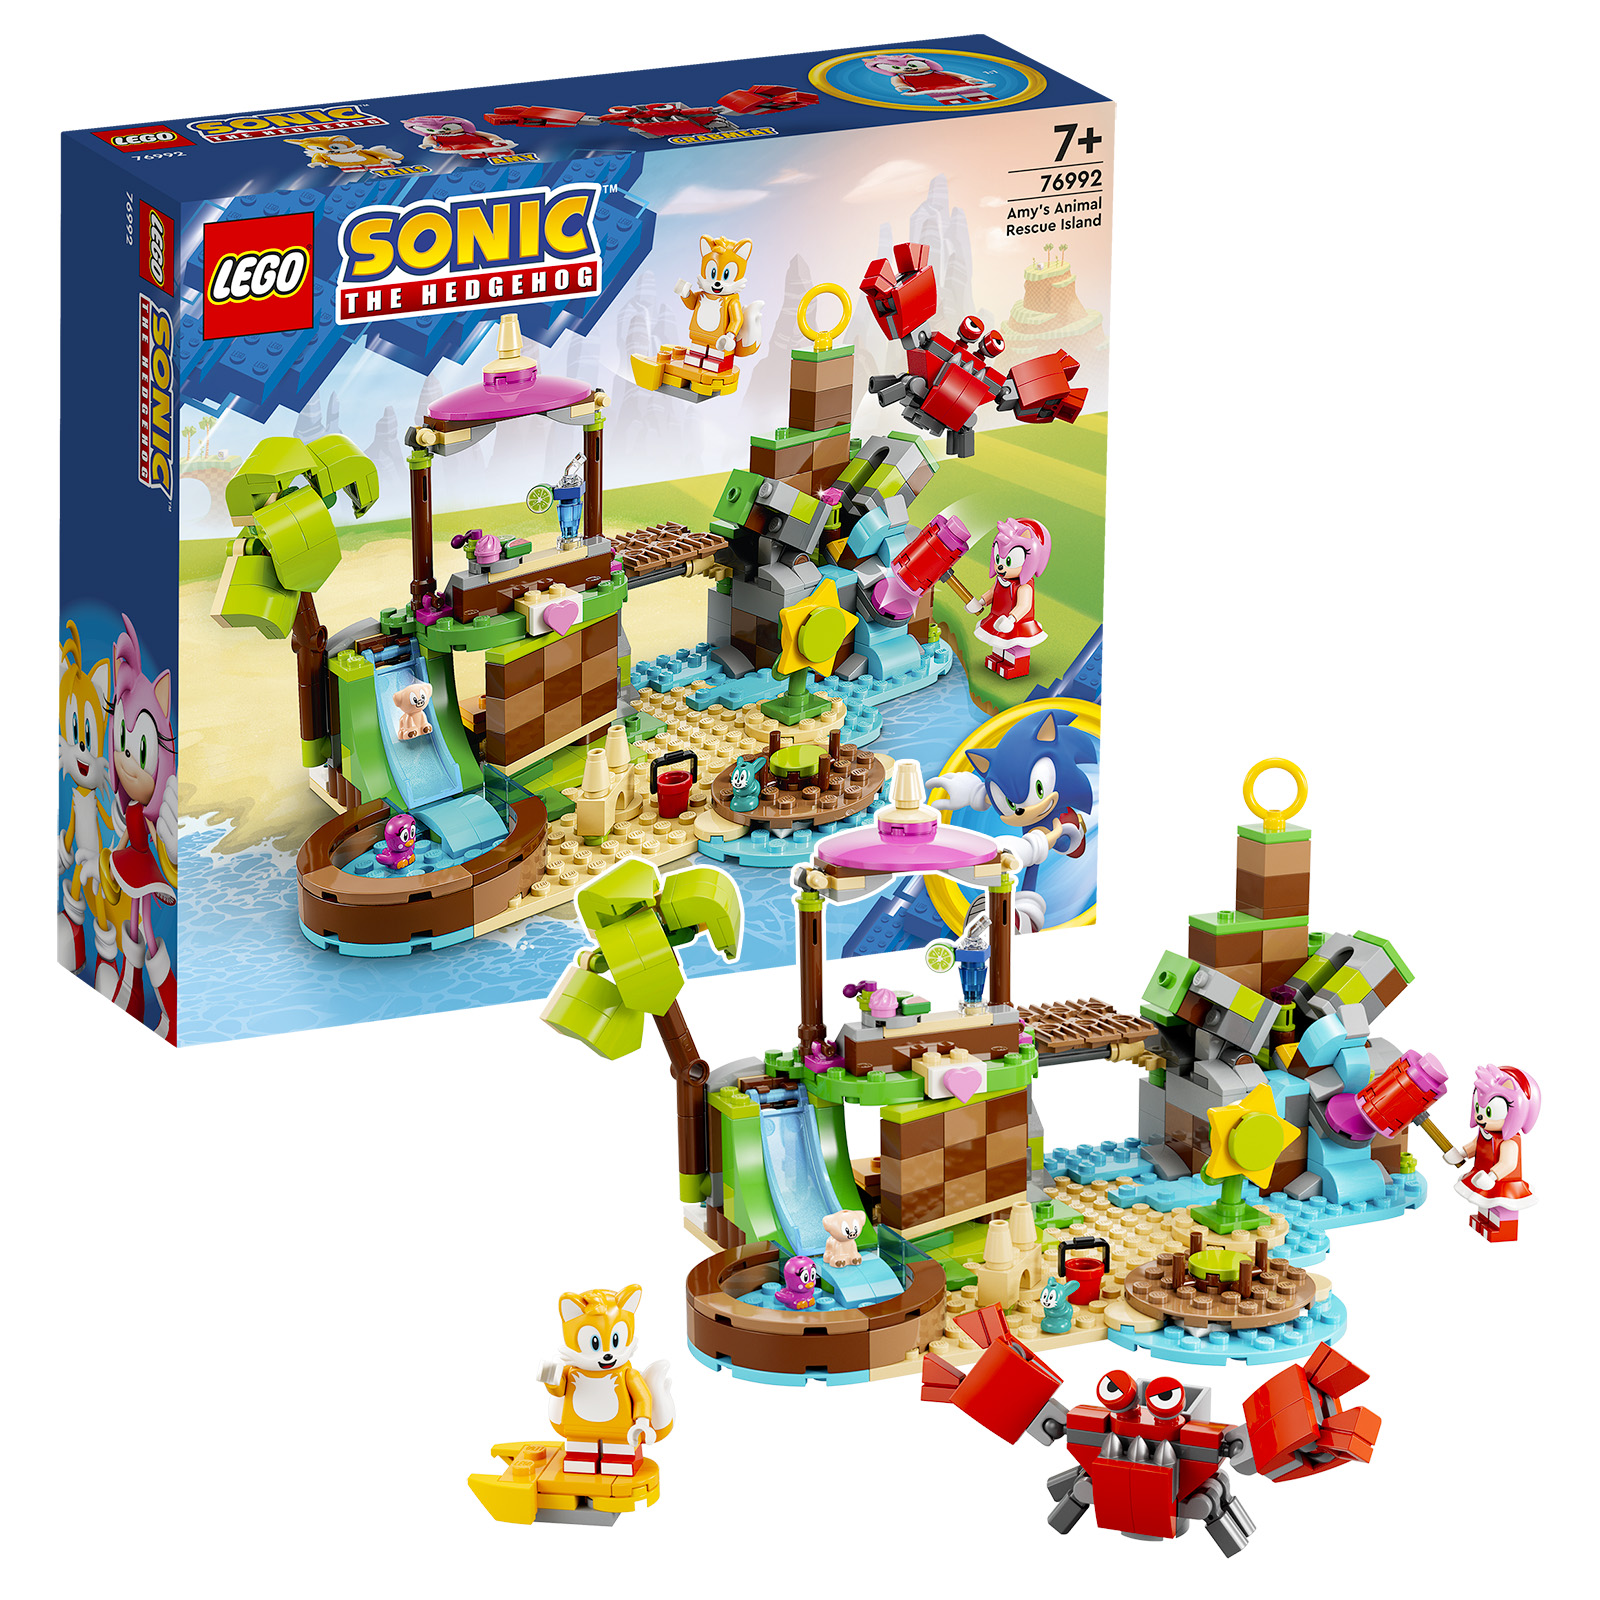 Amy's Animal Rescue Island 76992, LEGO® Sonic the Hedgehog™